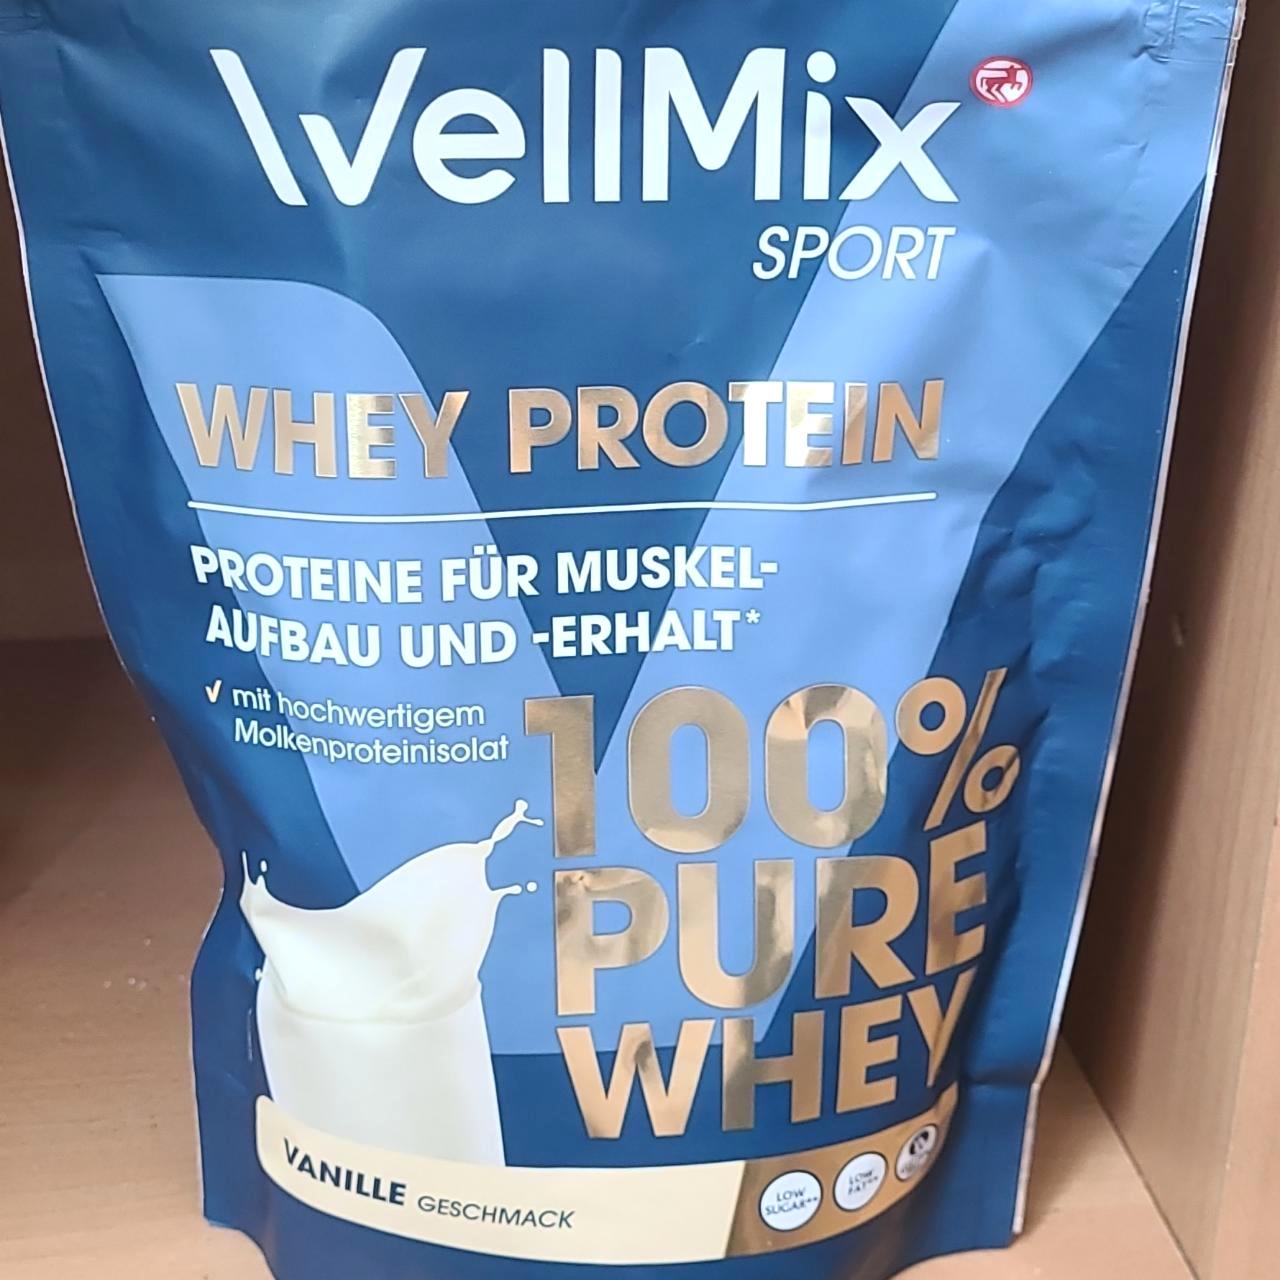 Képek - Whey protein Vanille geschmack WellMix Sport